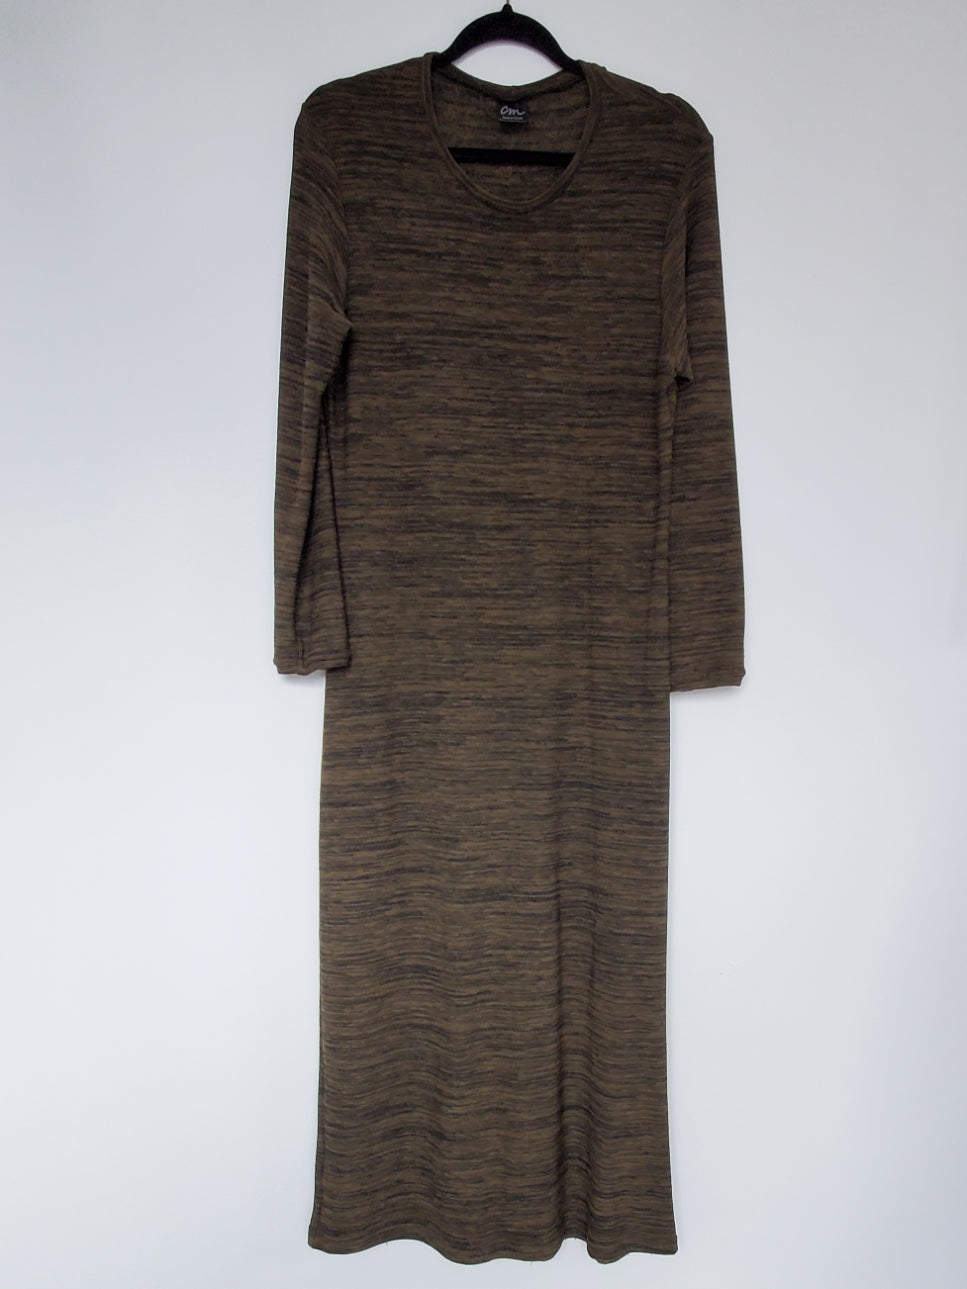 CM Long Sleeve Long Dress - Fuzzy Brown & Black 1of1